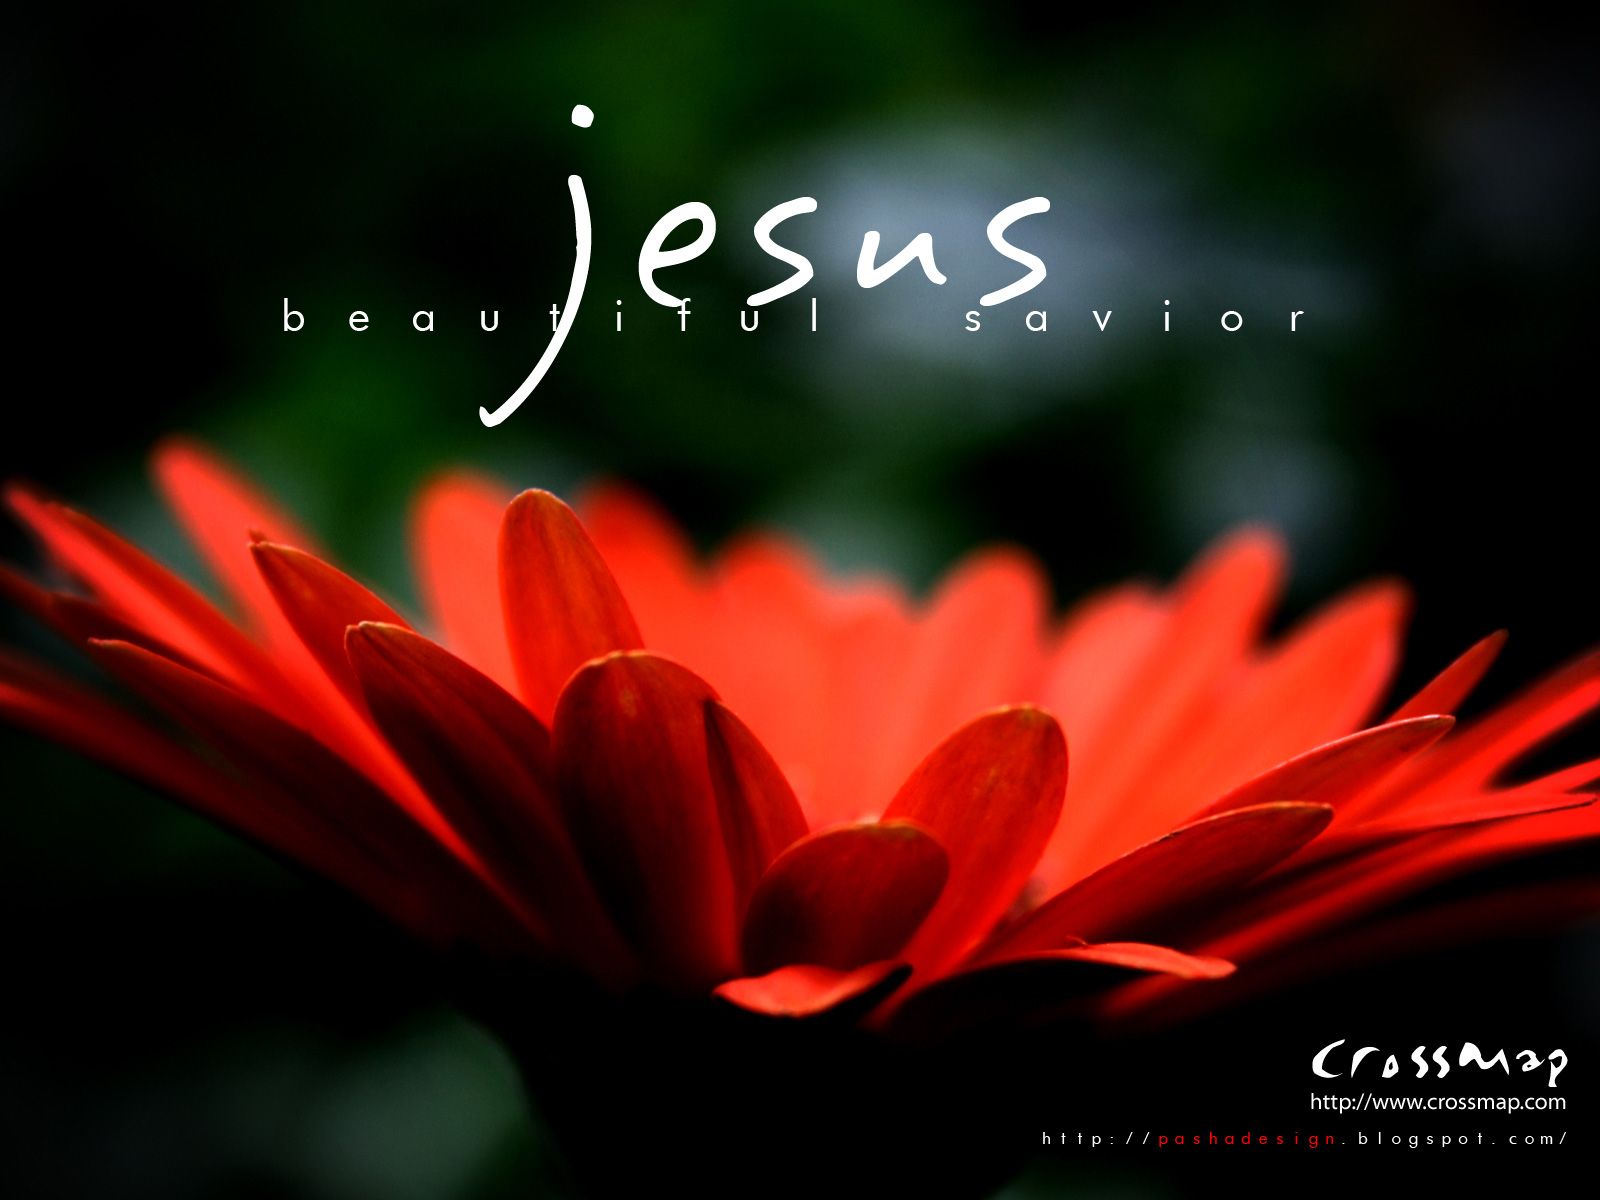 Jesus Beautiful Savior 1 | Christian Photographs | Crossmap ...